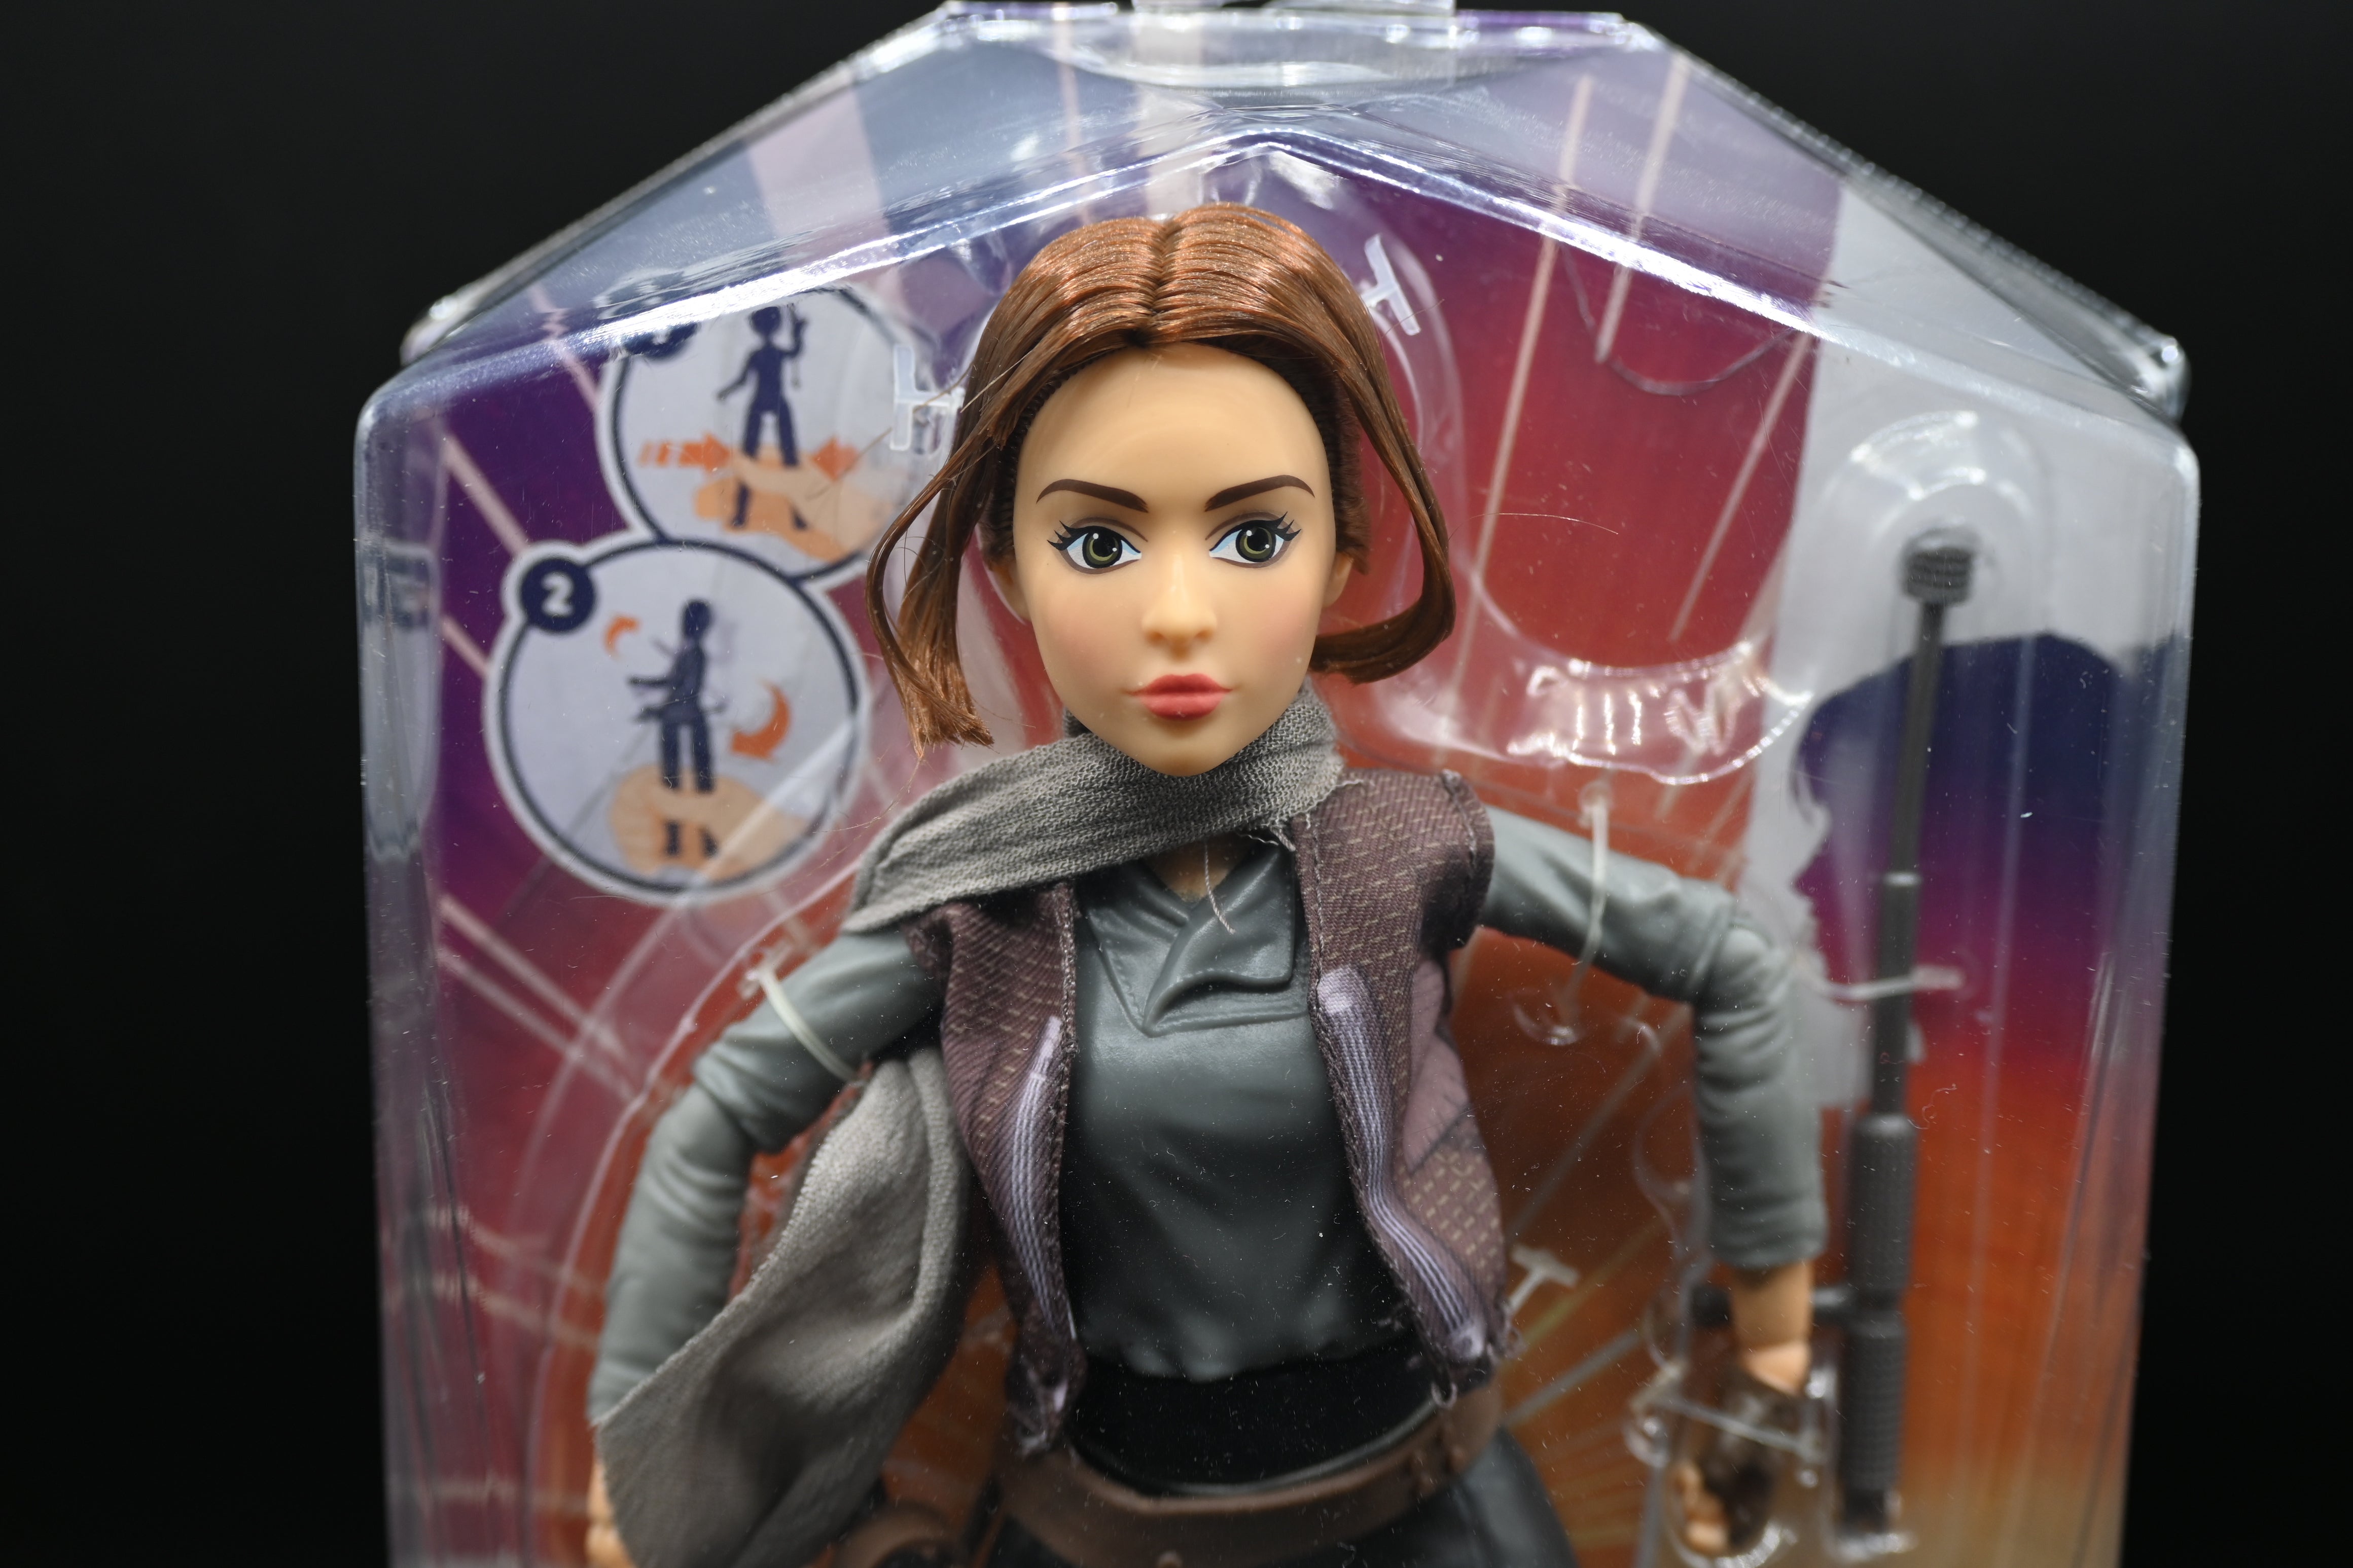 Figurine Star Wars Forces of Destiny Rey of Jakku - Figurine de collection  - Achat & prix